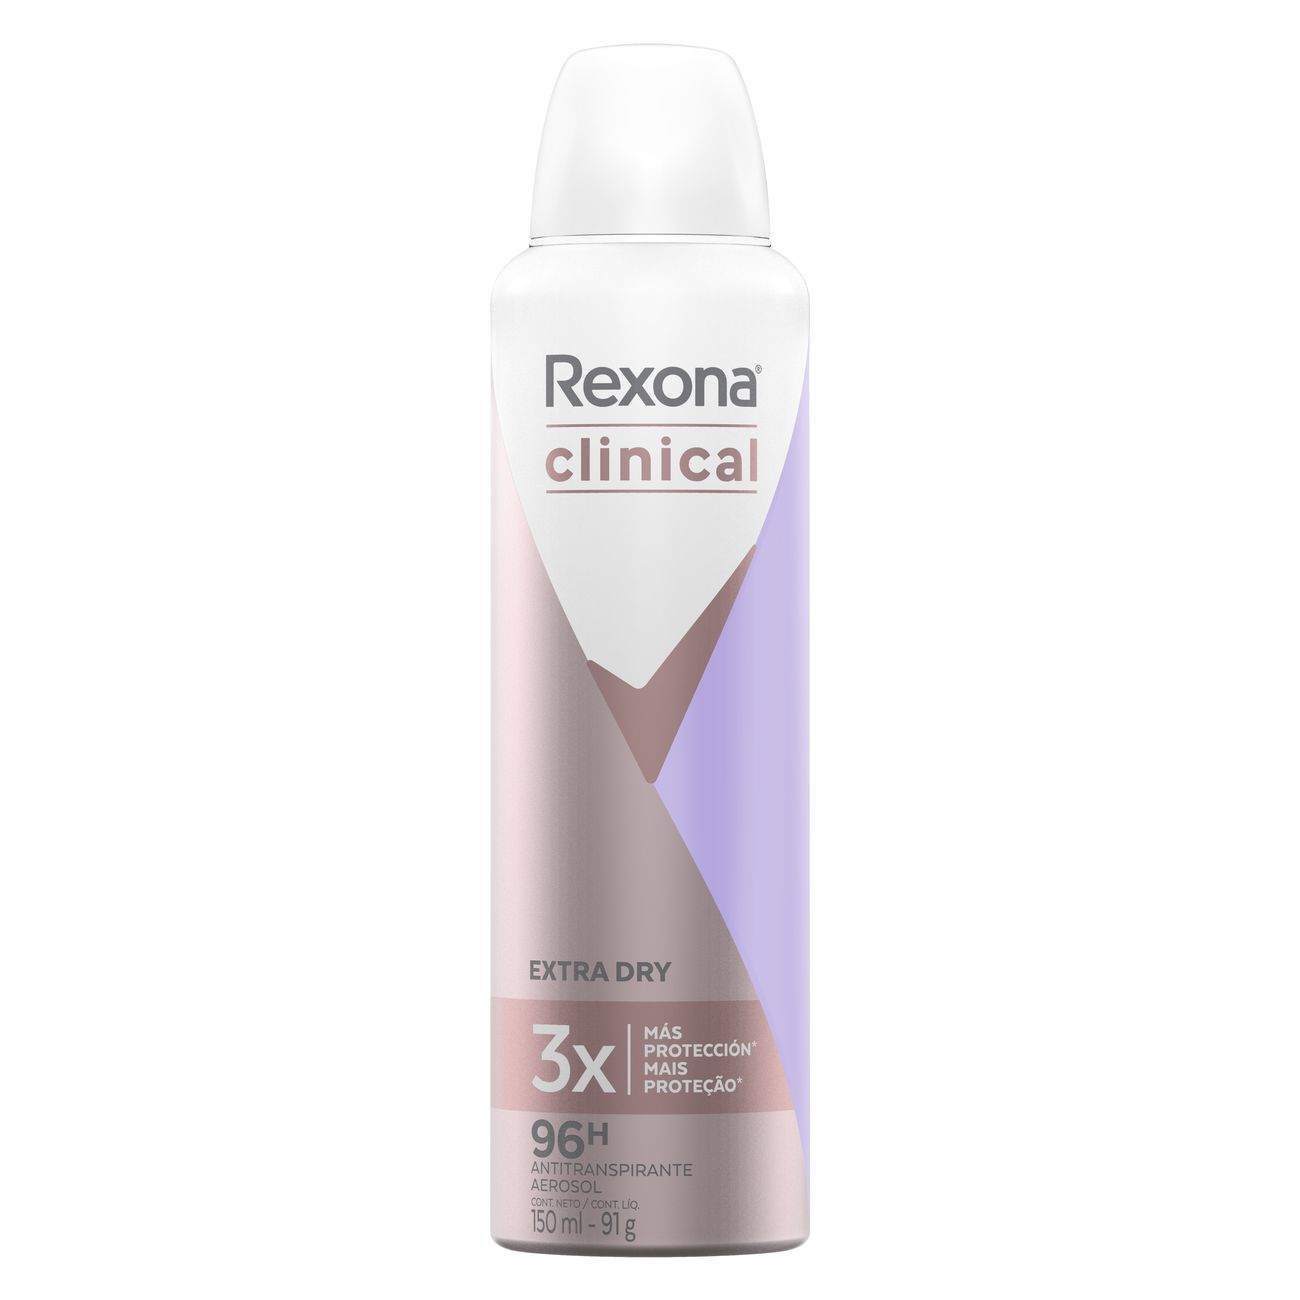 Desodorante Aerosol Rexona Clinical Feminino Extra Dry 91g